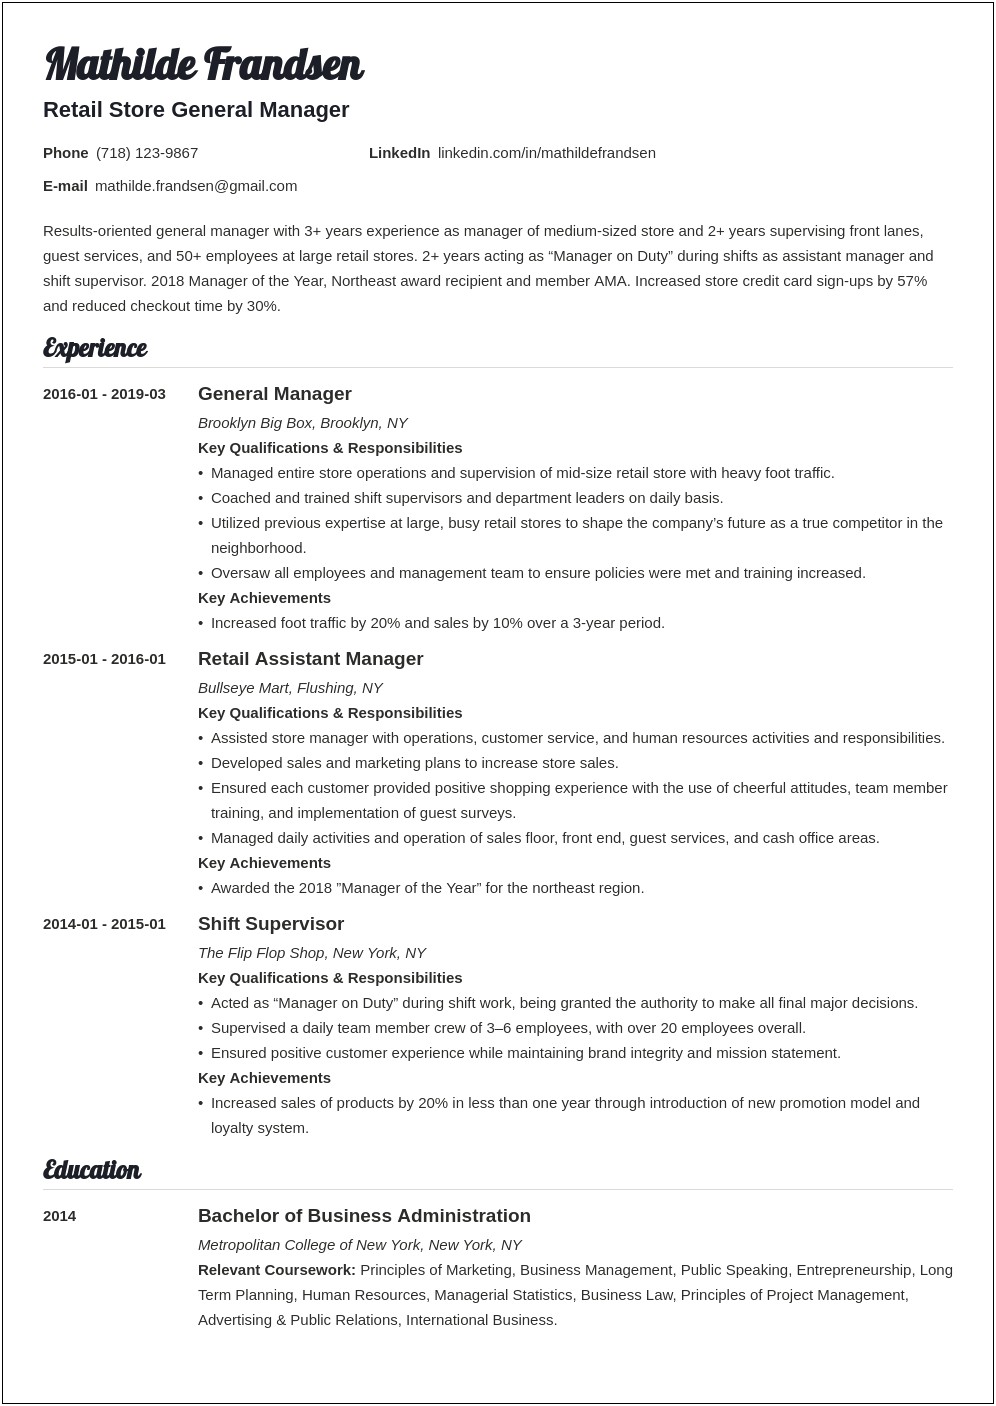 Marriott General Manager Sample Resume